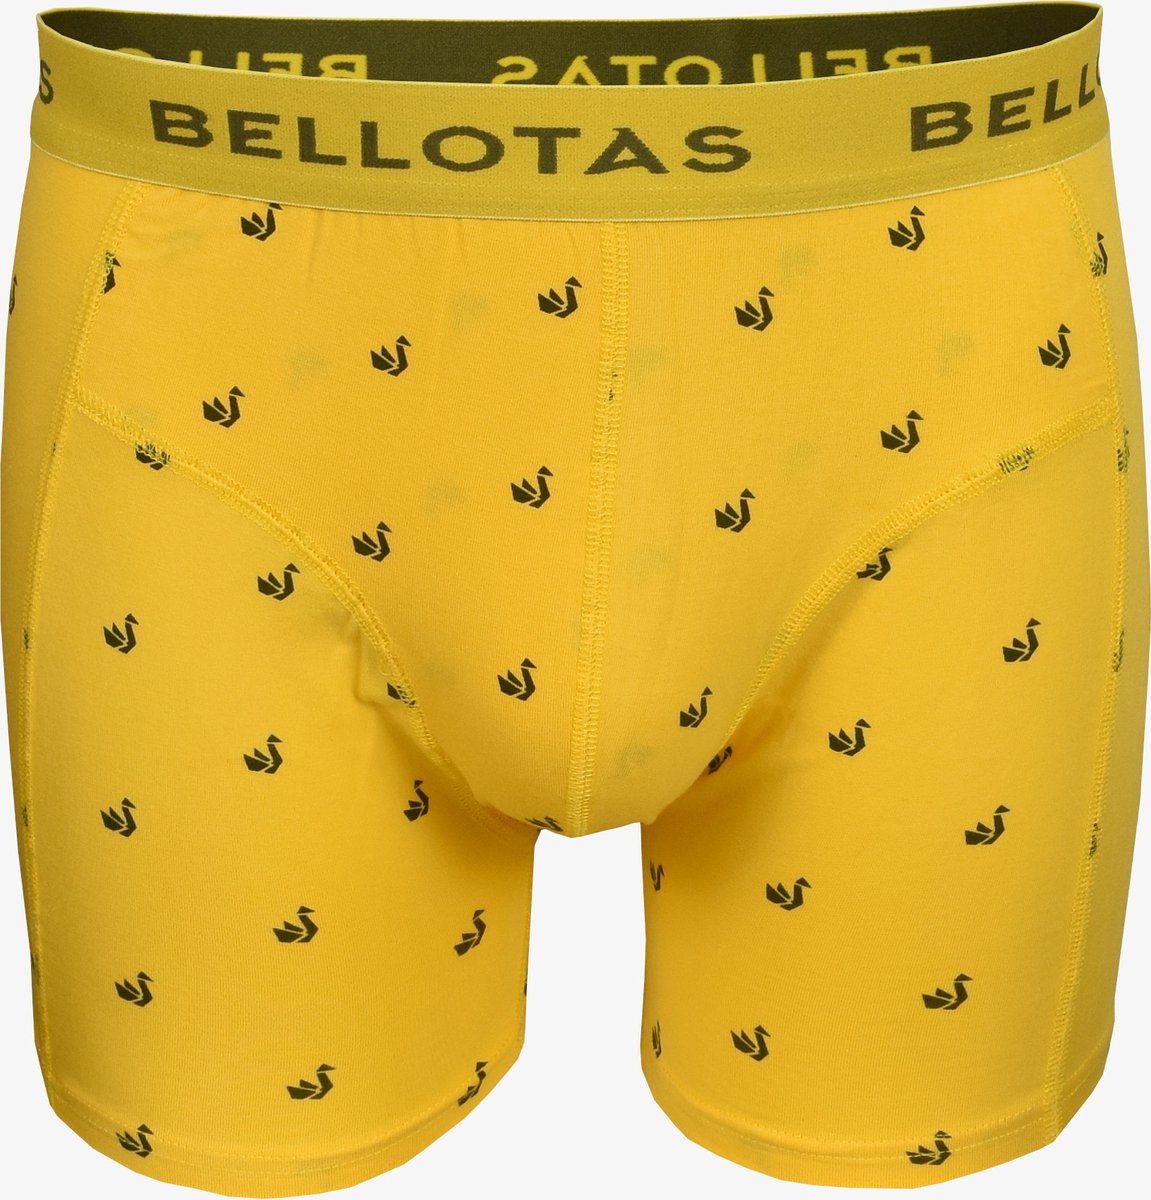 Bellotas - Boxershort - Odile XXL